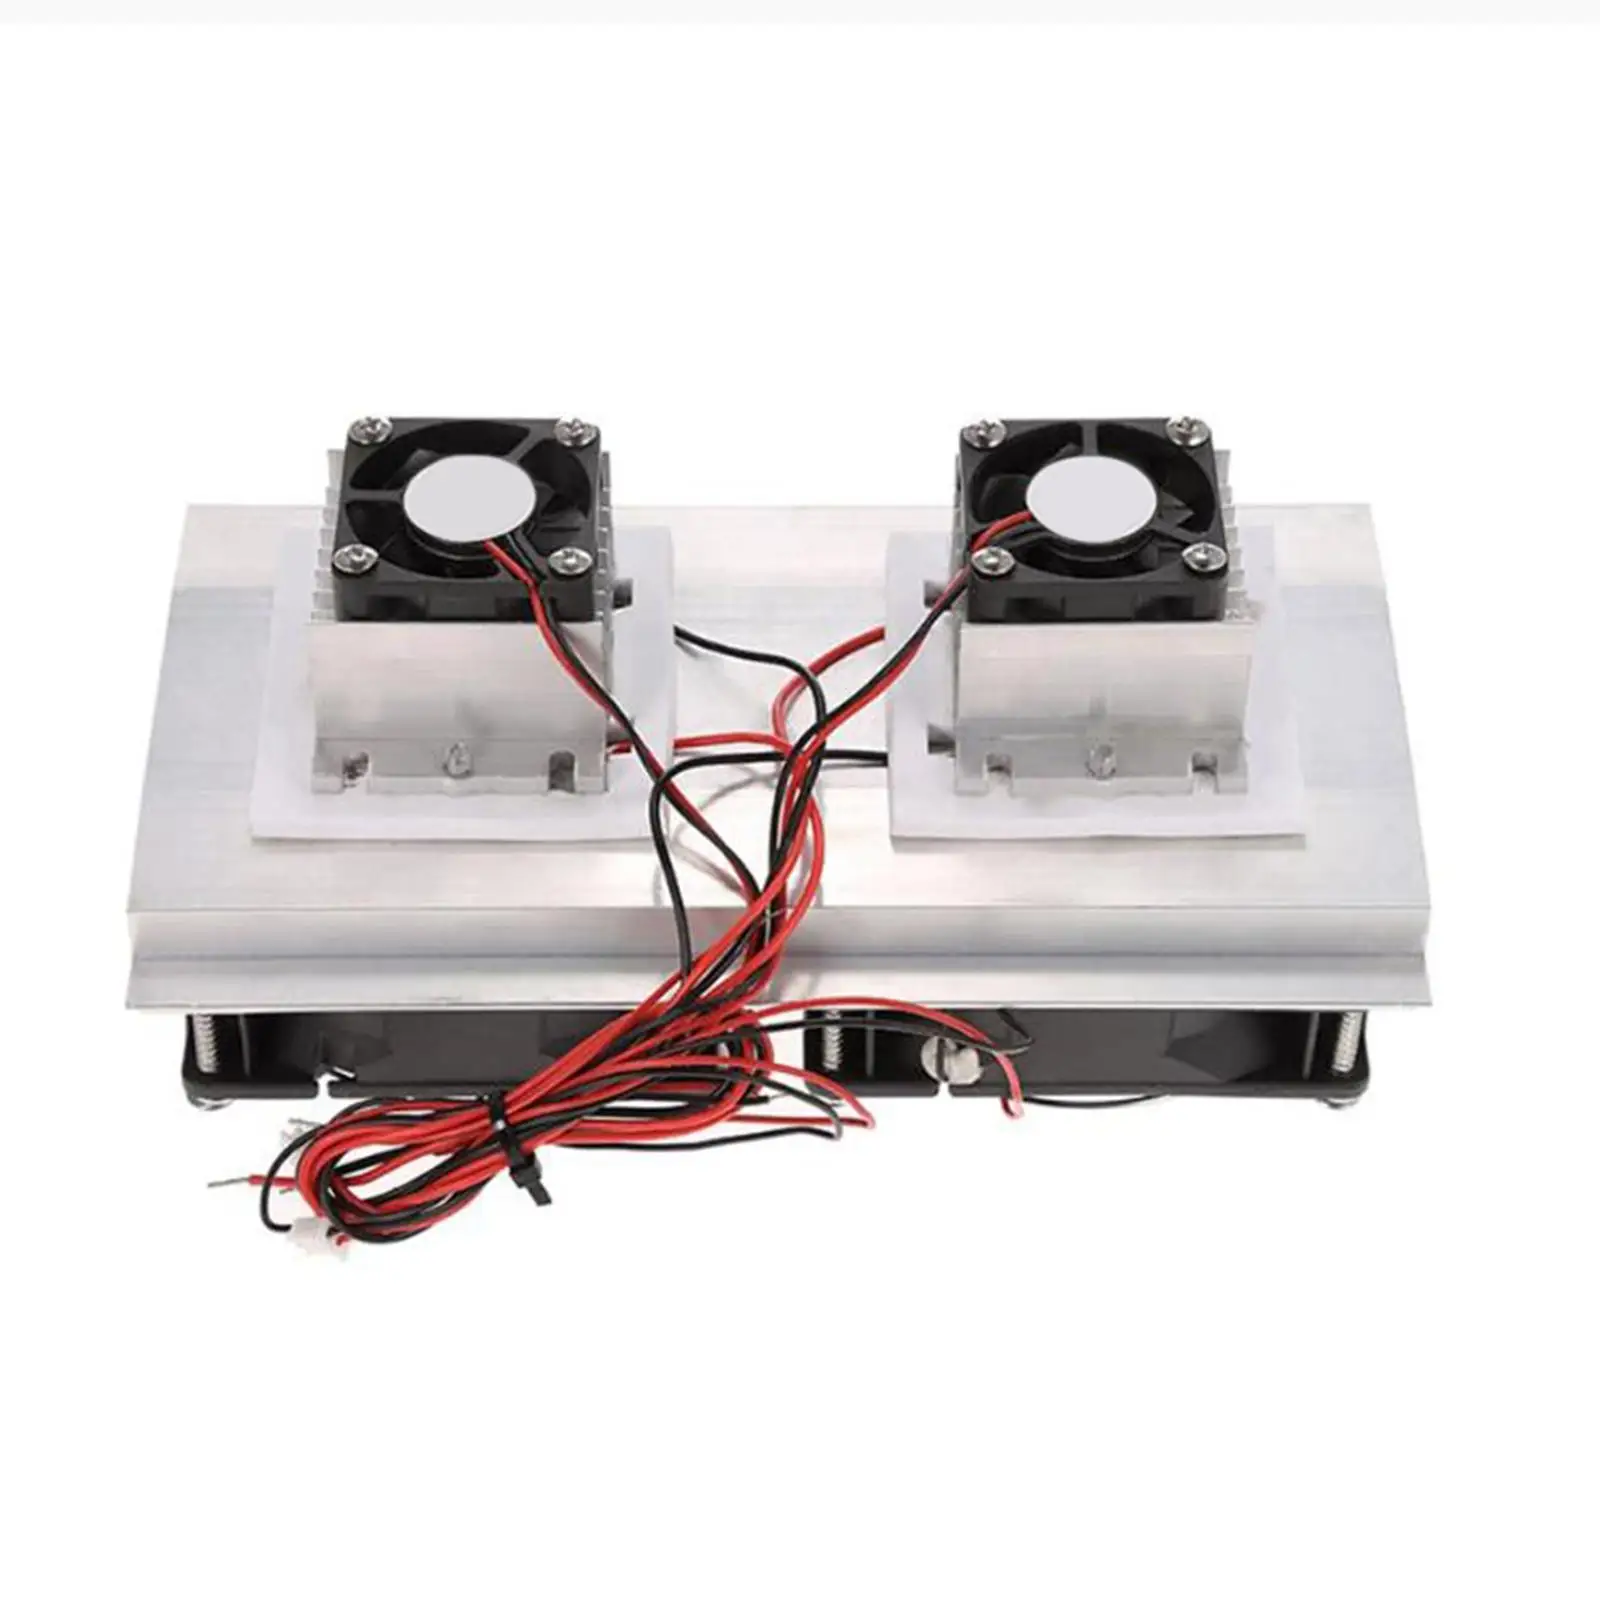 Peltier Cooler Kit with Power for DIY Mini Fridge Computer Cooling